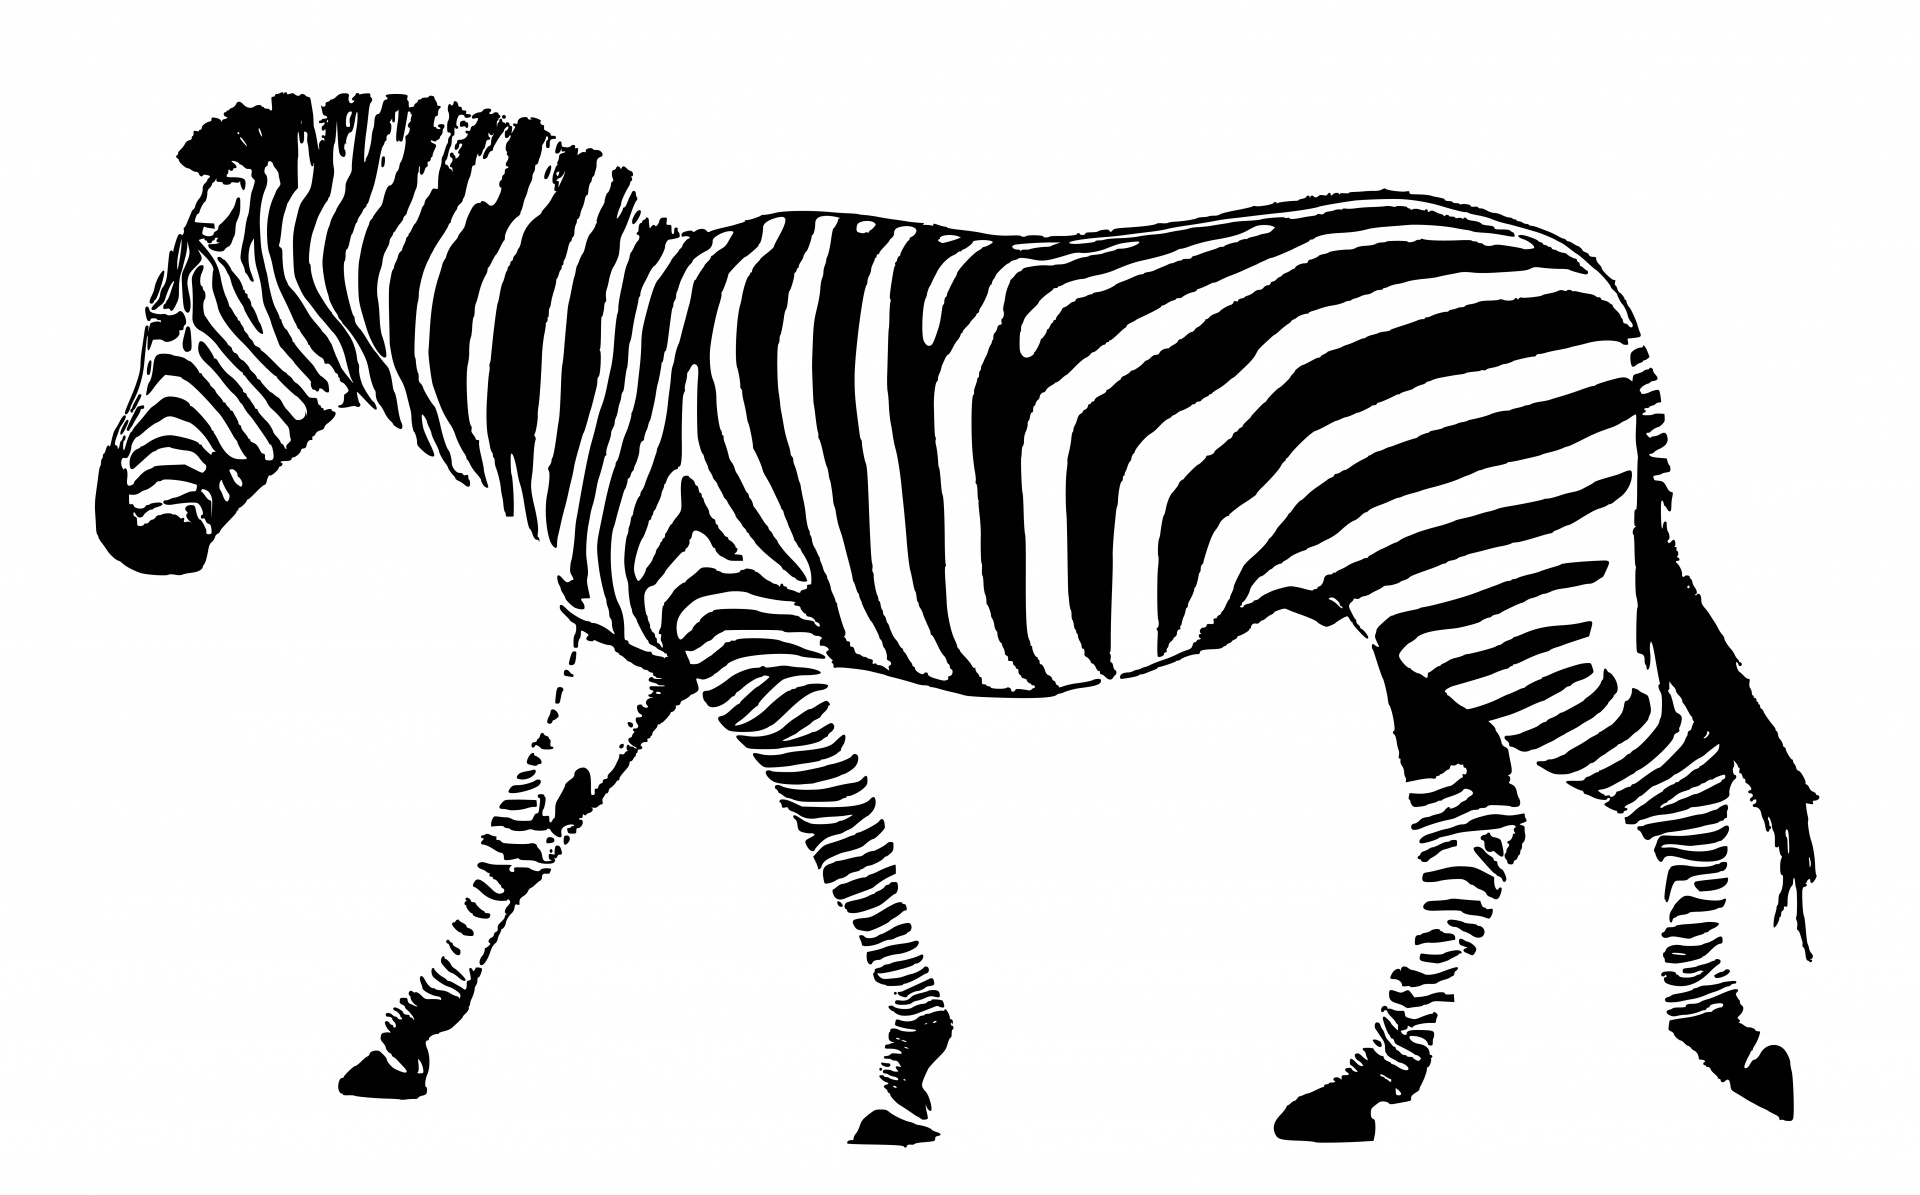 Zebra Animal Illustration Black White Free Image From Needpix Com